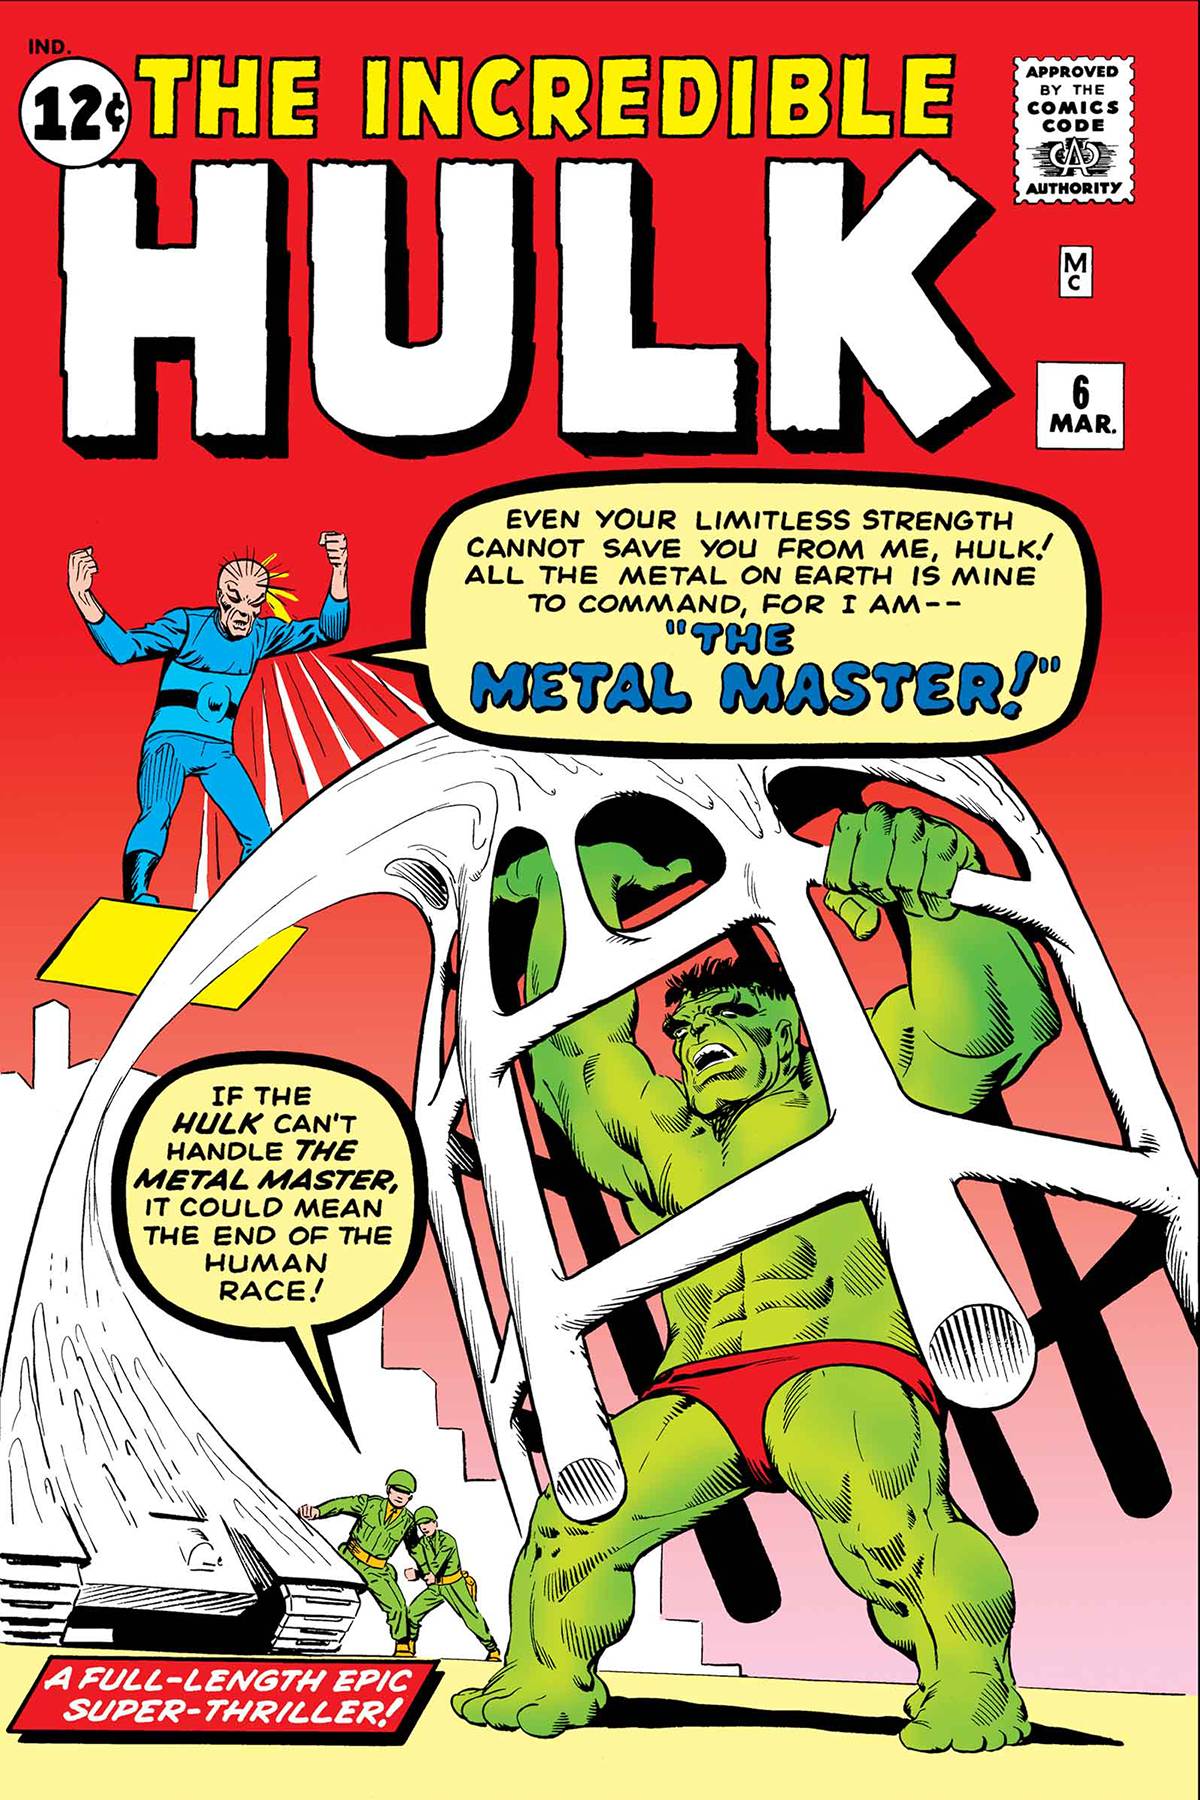 True Believers Hulk Head of Banner #1